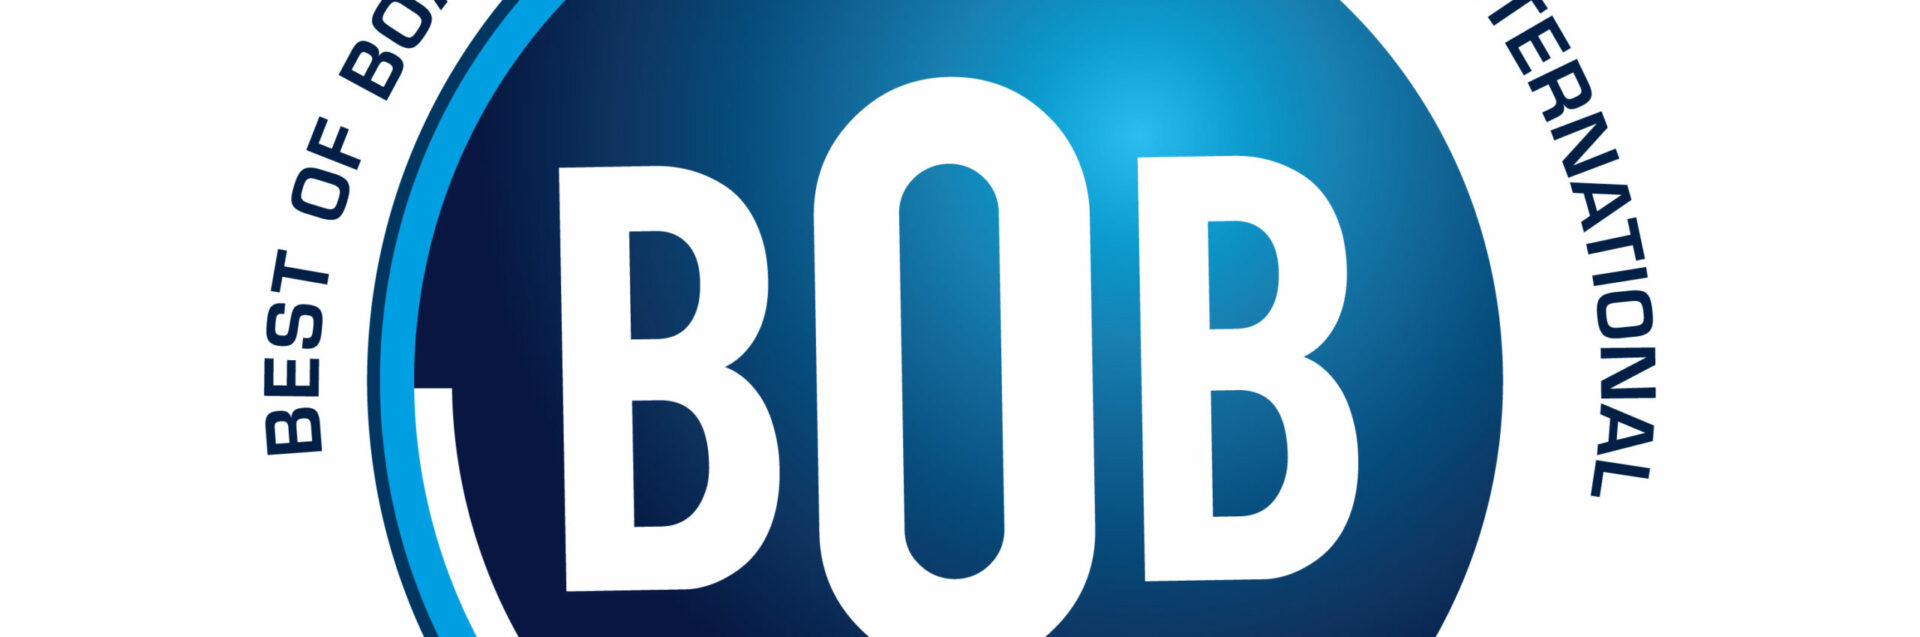 bob-2020-finalist-scaled-1